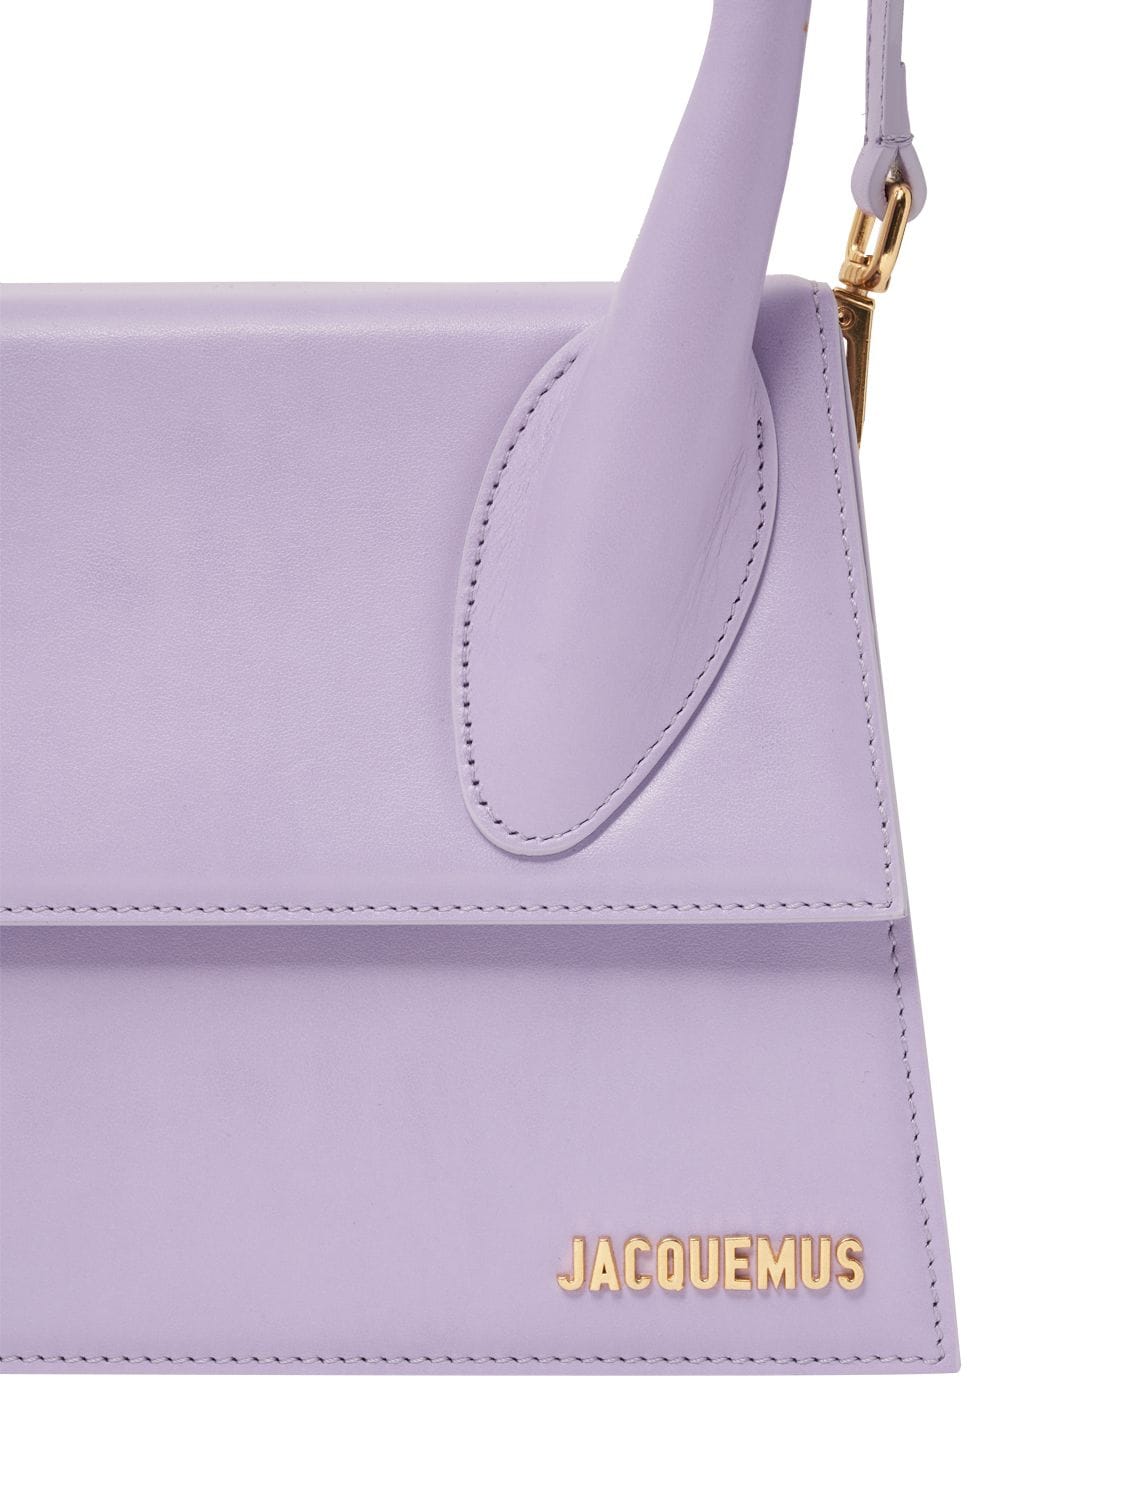 Jacquemus Le Grand Chiquito Bag Lilac, Satchel